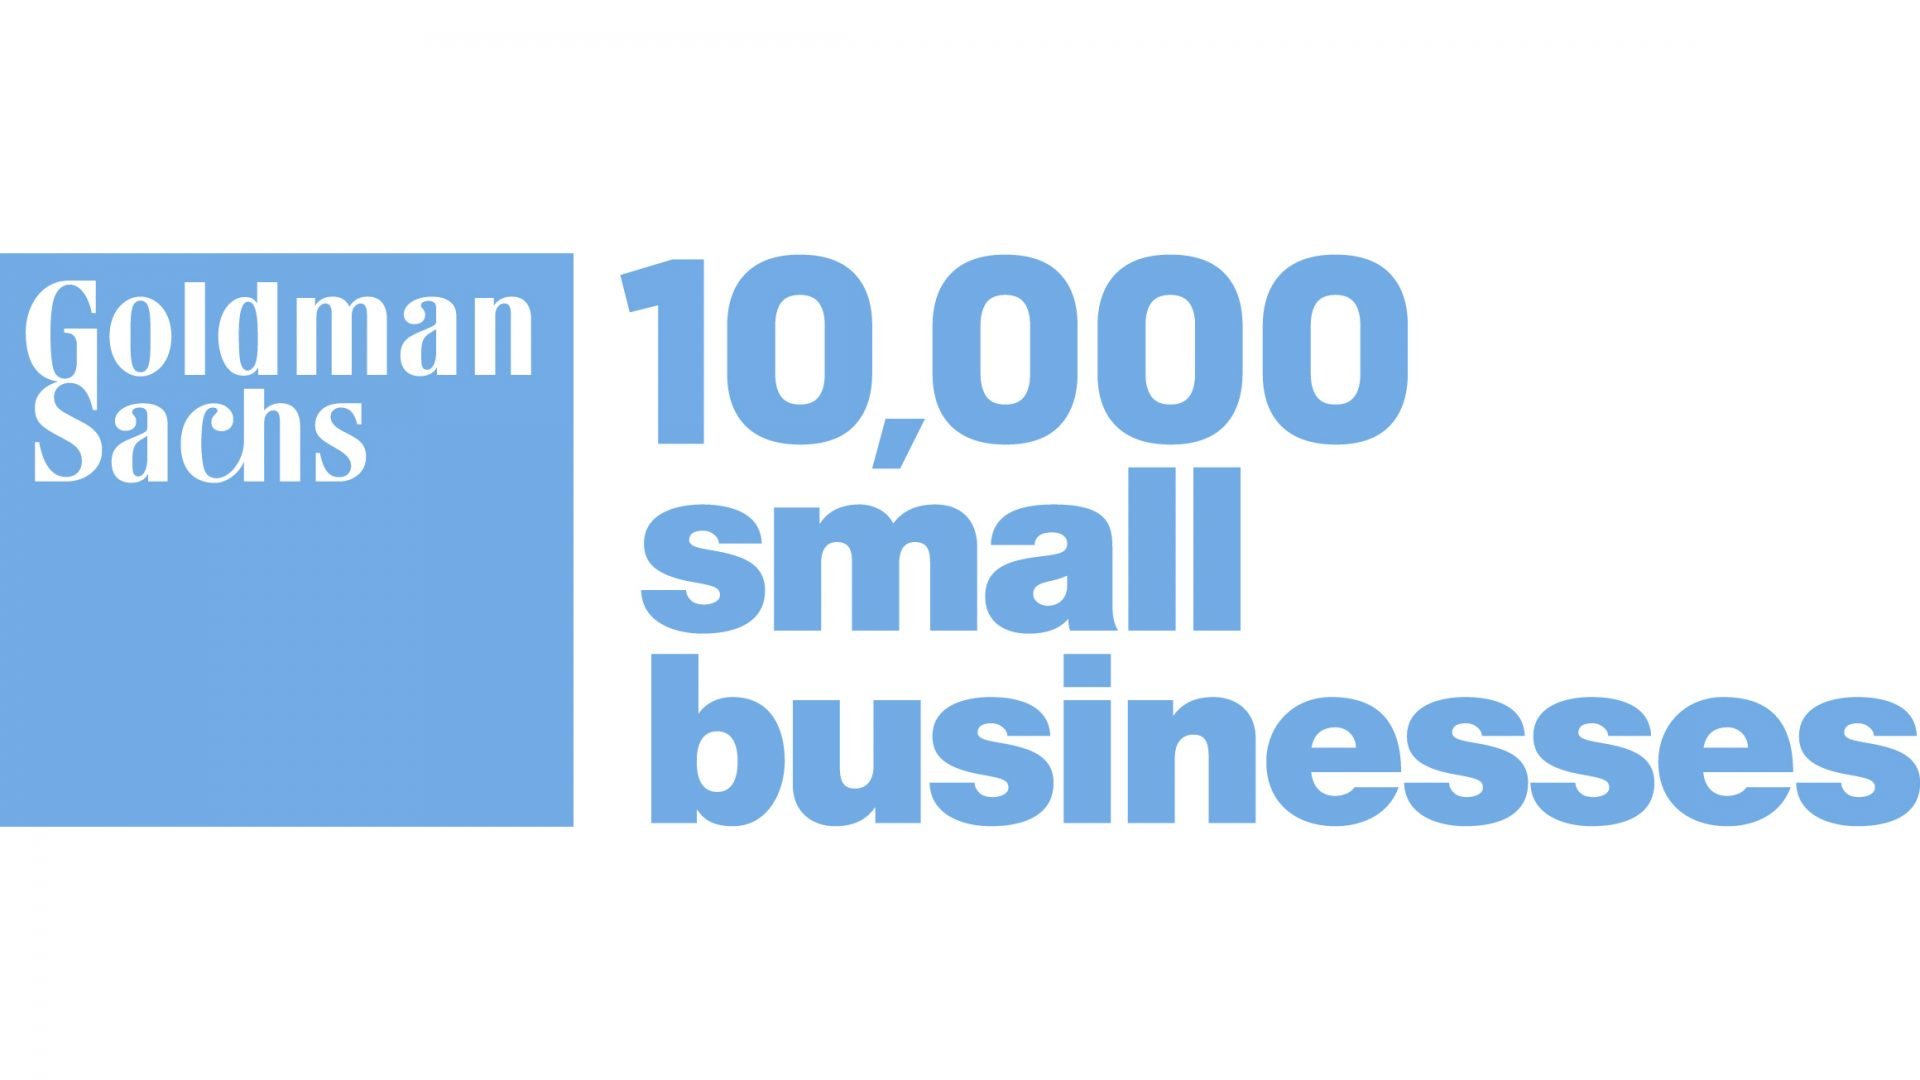 Goldman Sachs Small Business Logo